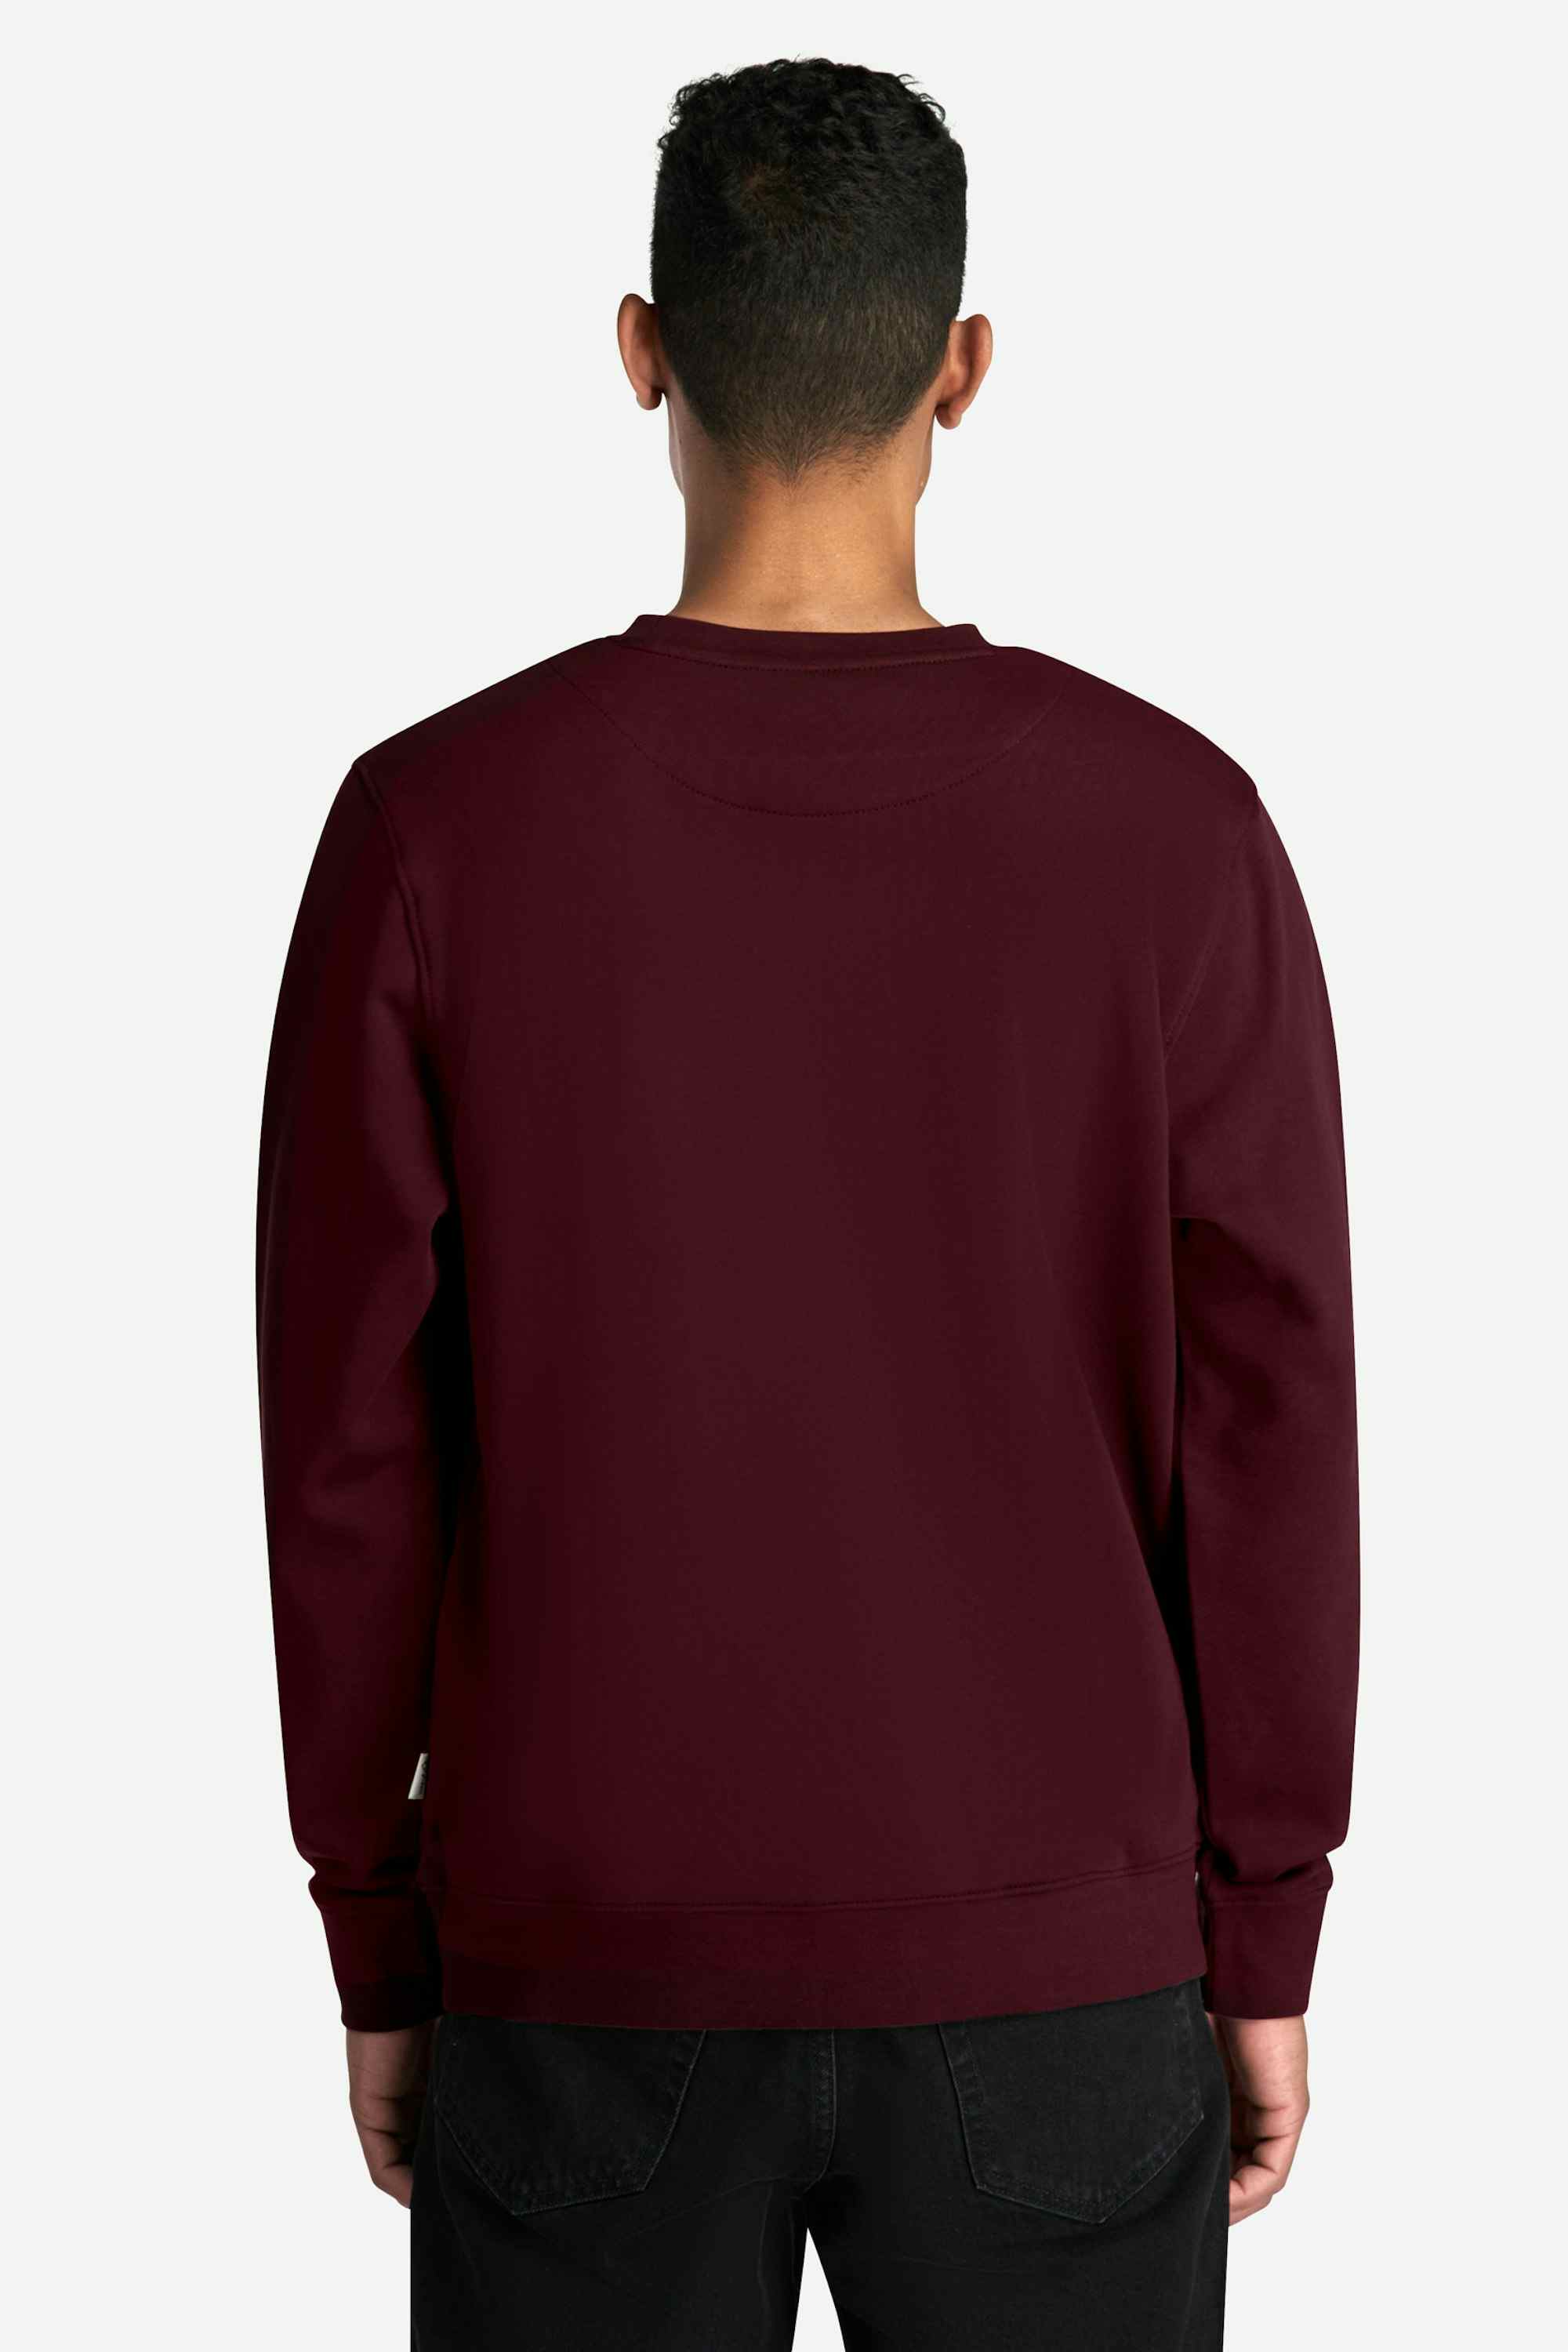 A-dam burgundy sweatshirt with keys embroidery from organic cotton | A-dam